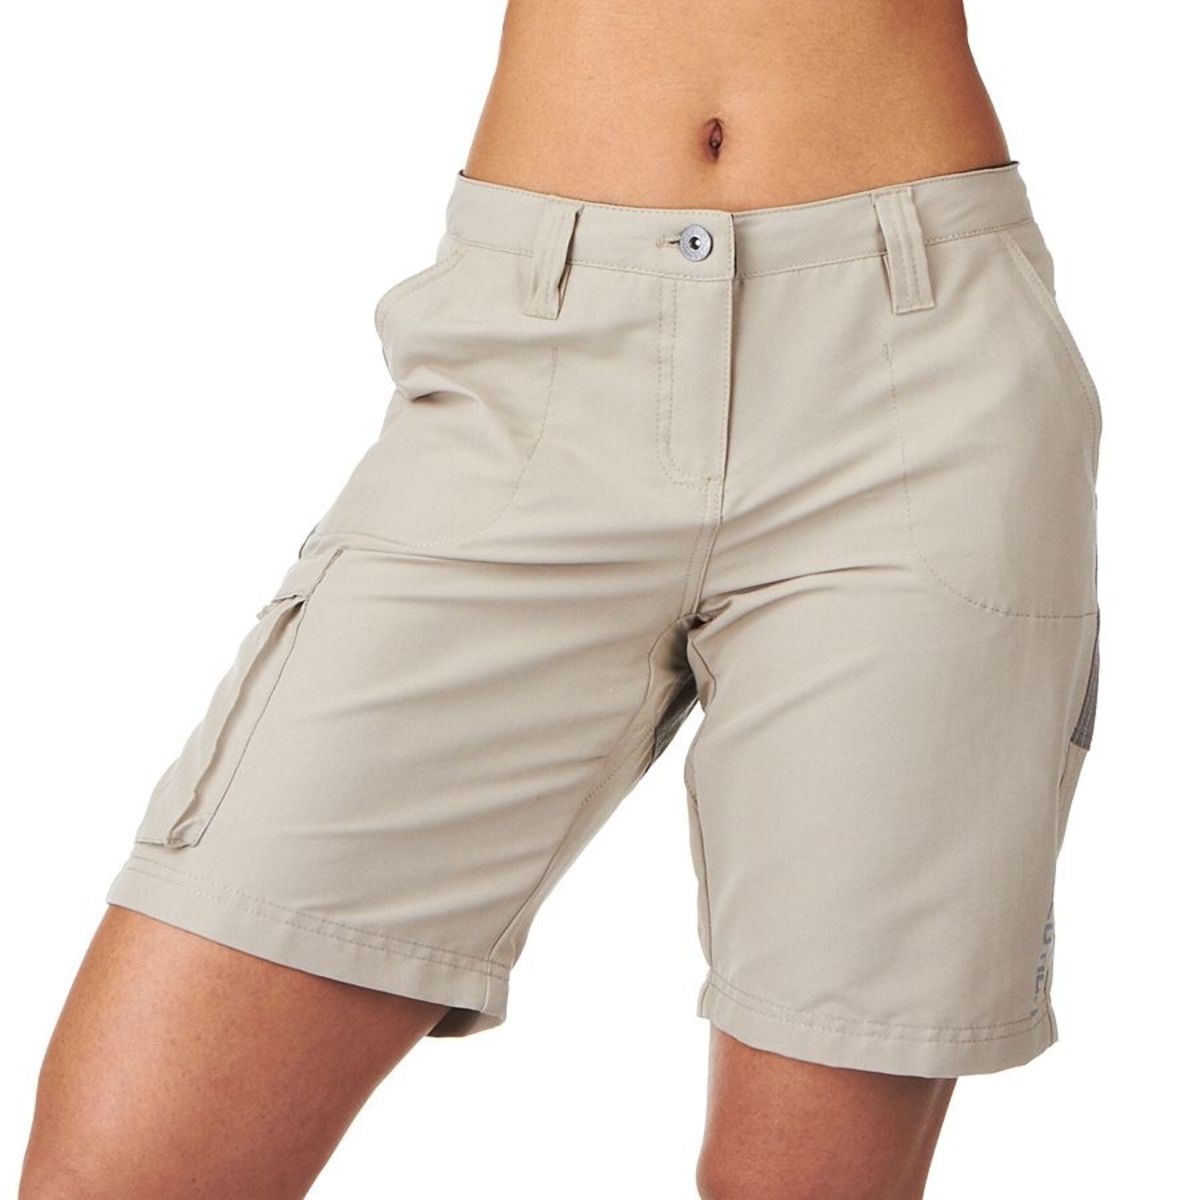 how to wear ladies shorts – careyfashion.com